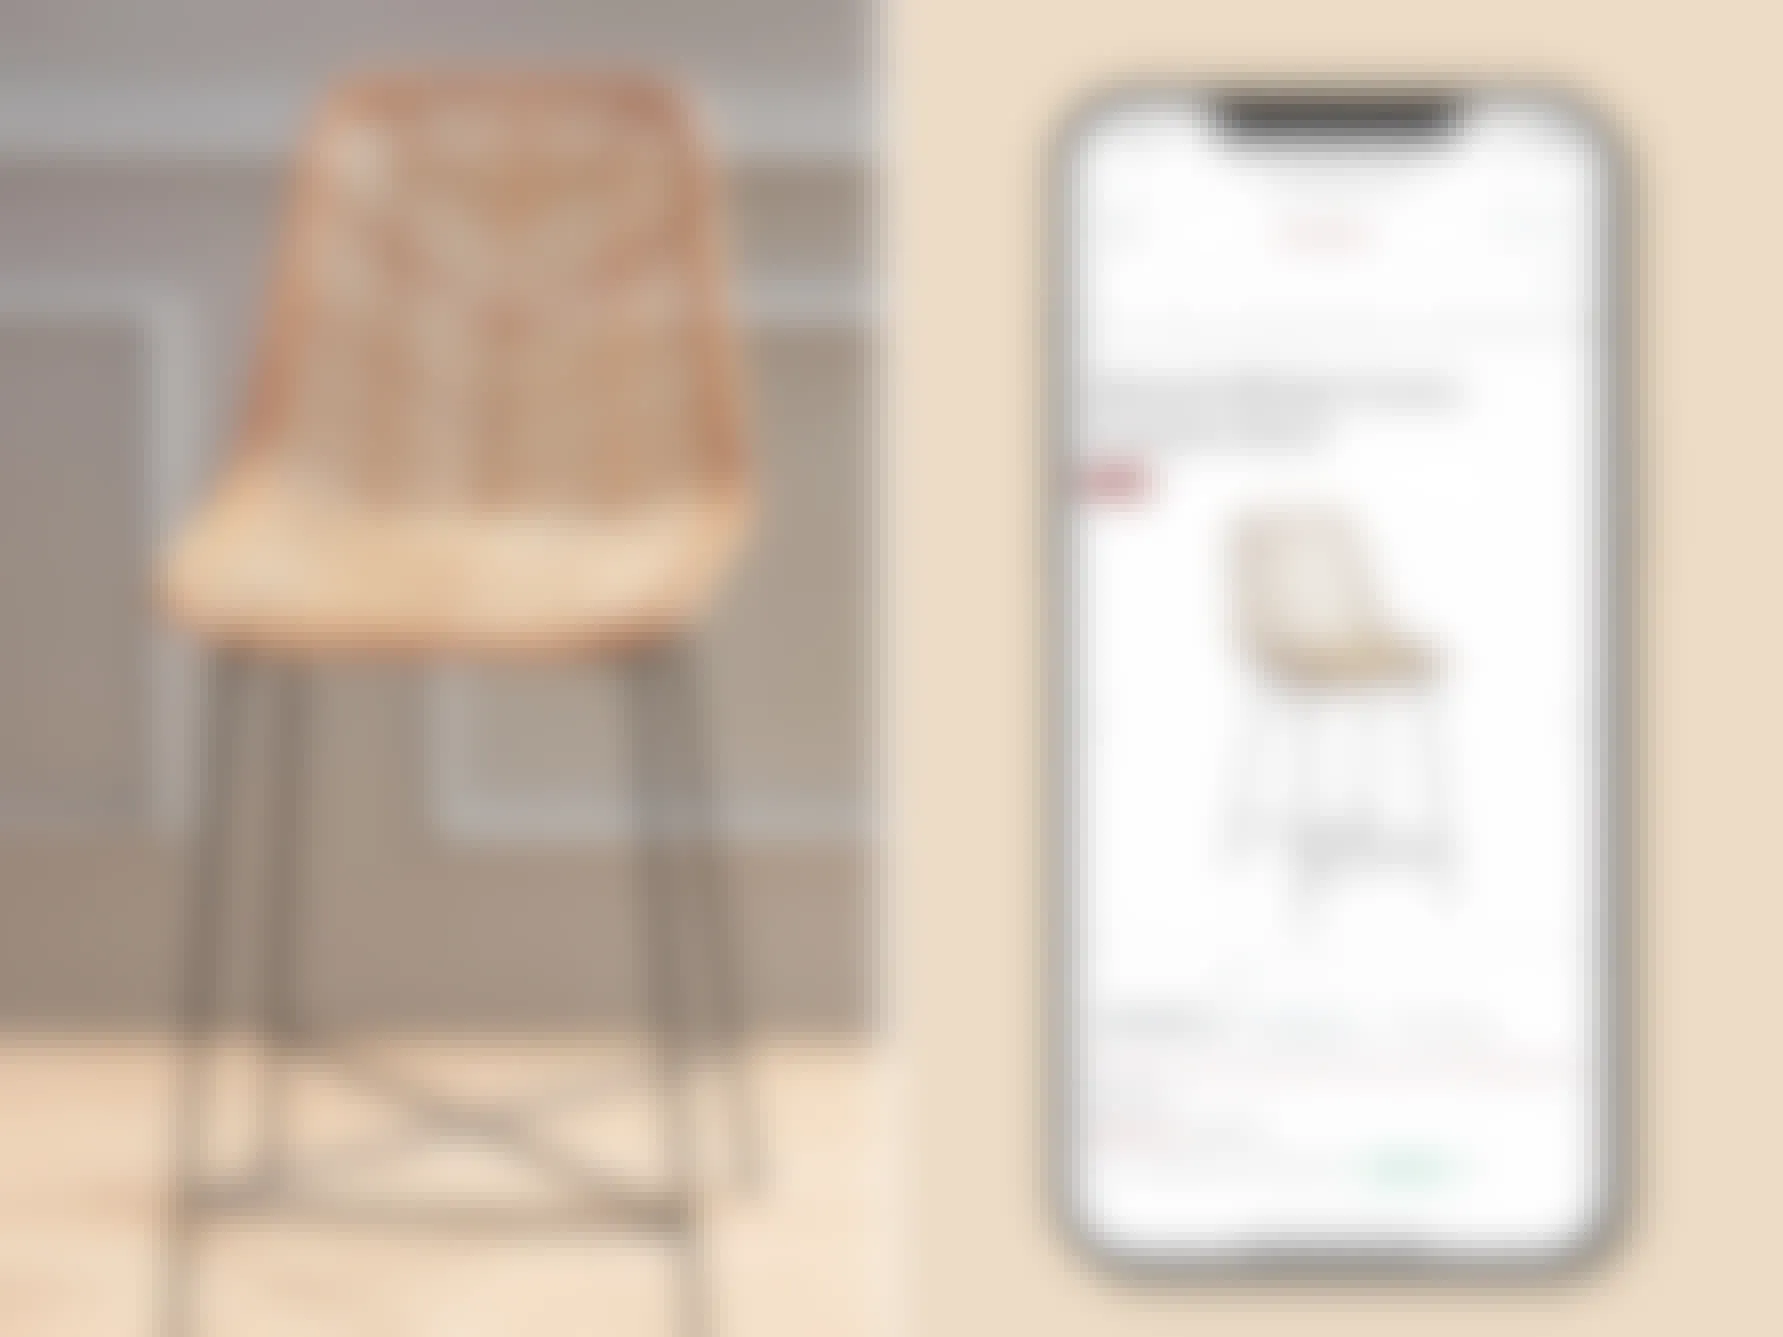 world market wicker stool and phone screenshot for price matching